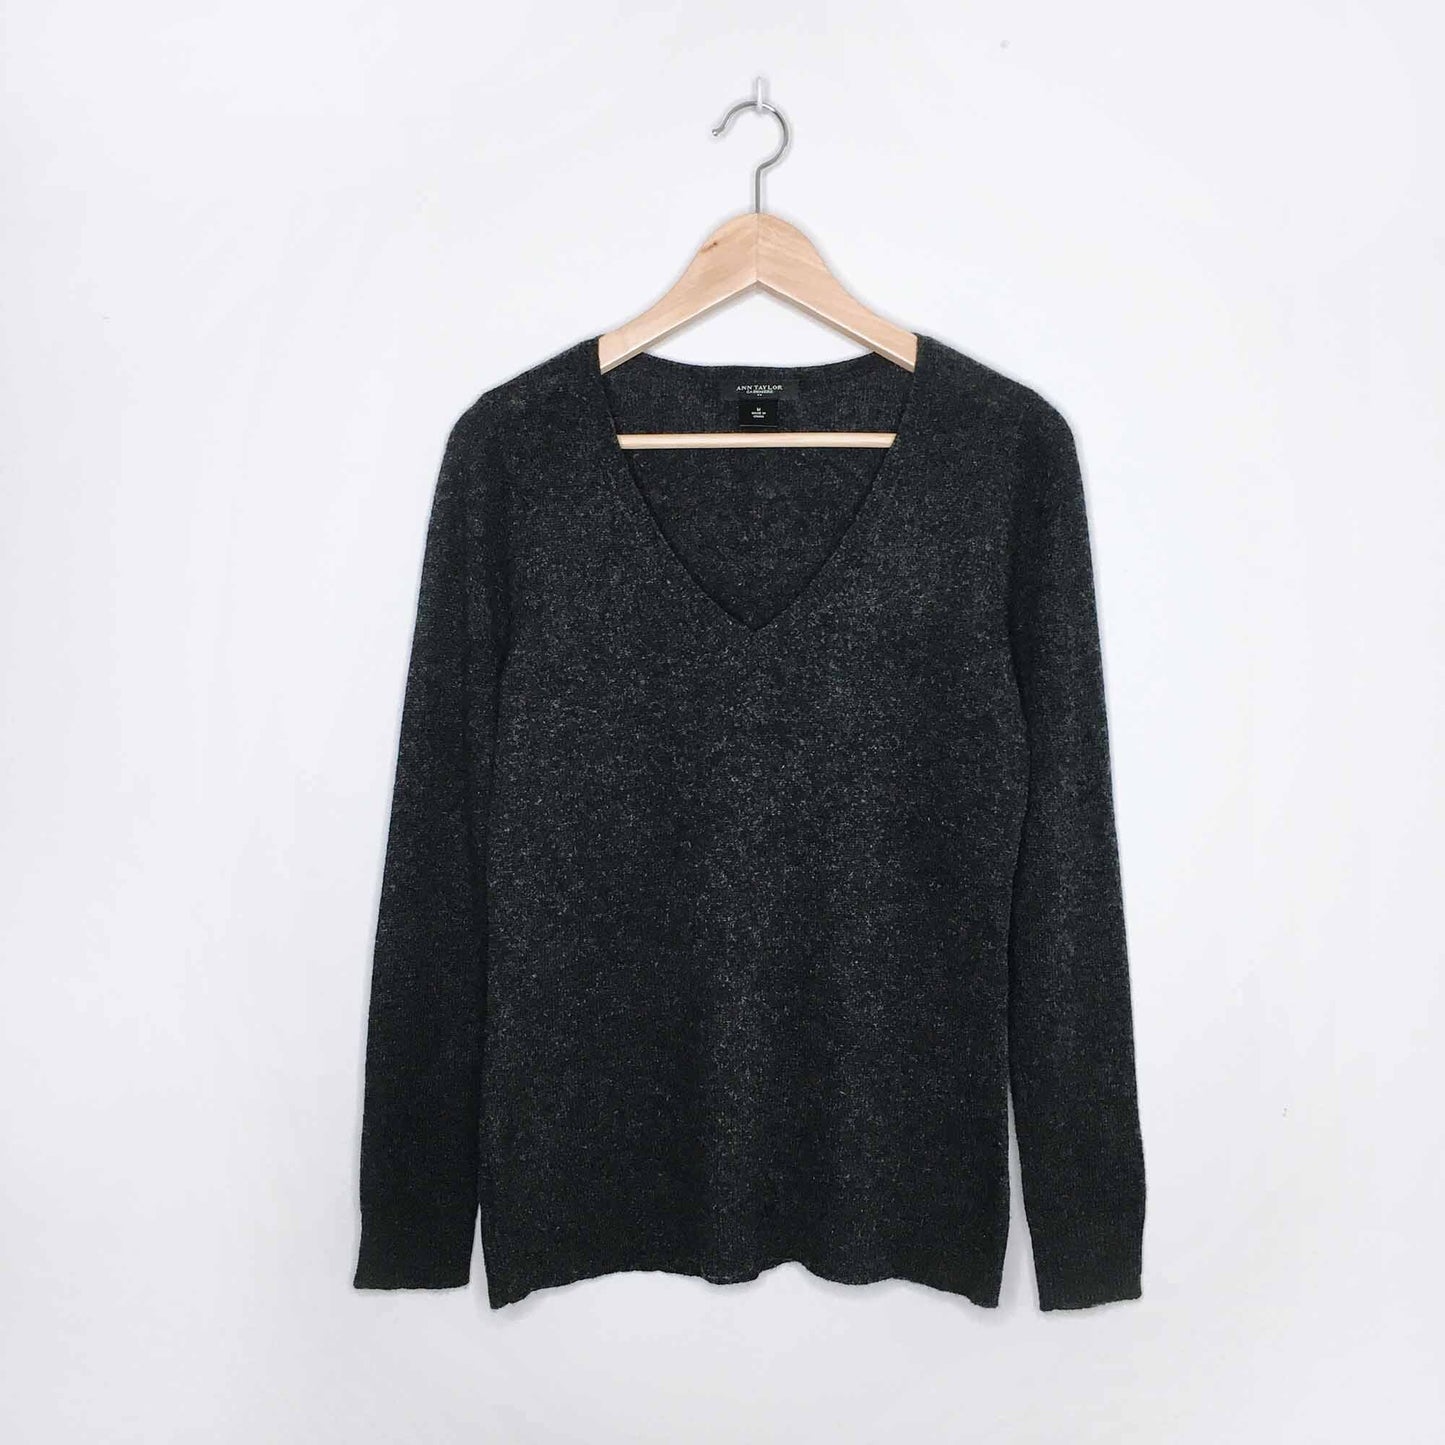 Ann Taylor cashmere v-neck sweater - size Medium